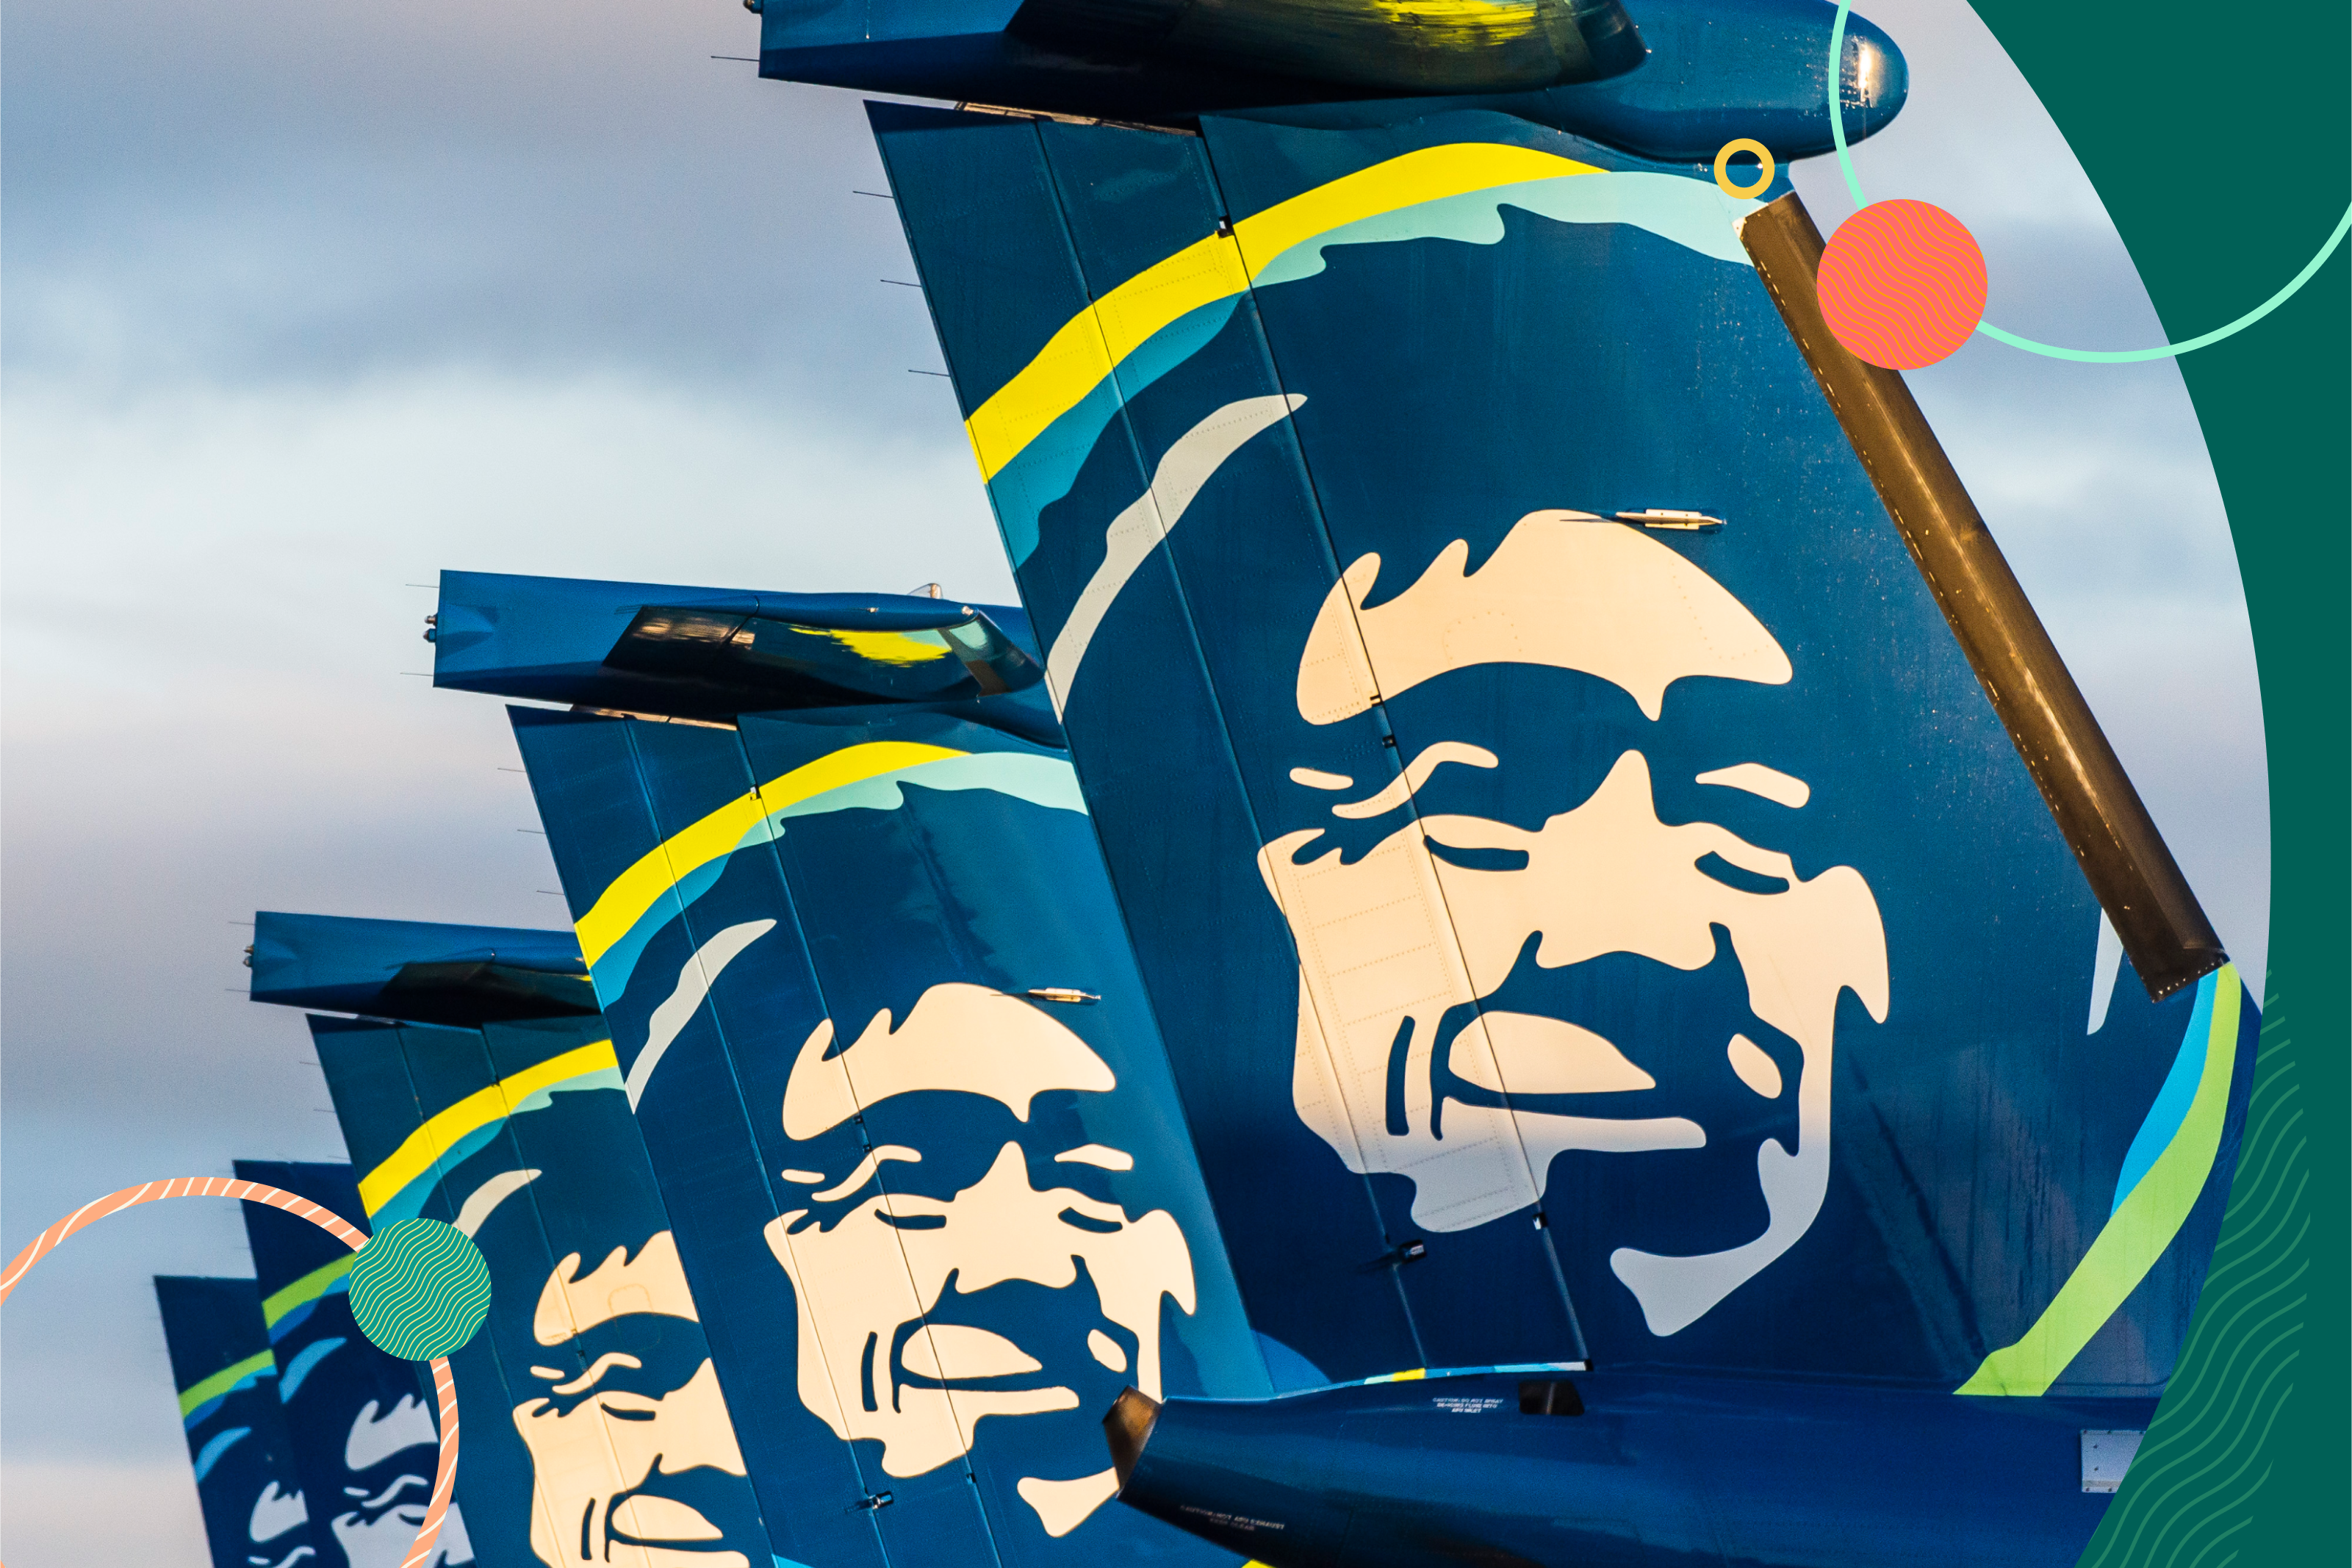 Alaska Airlines tailfins lined up